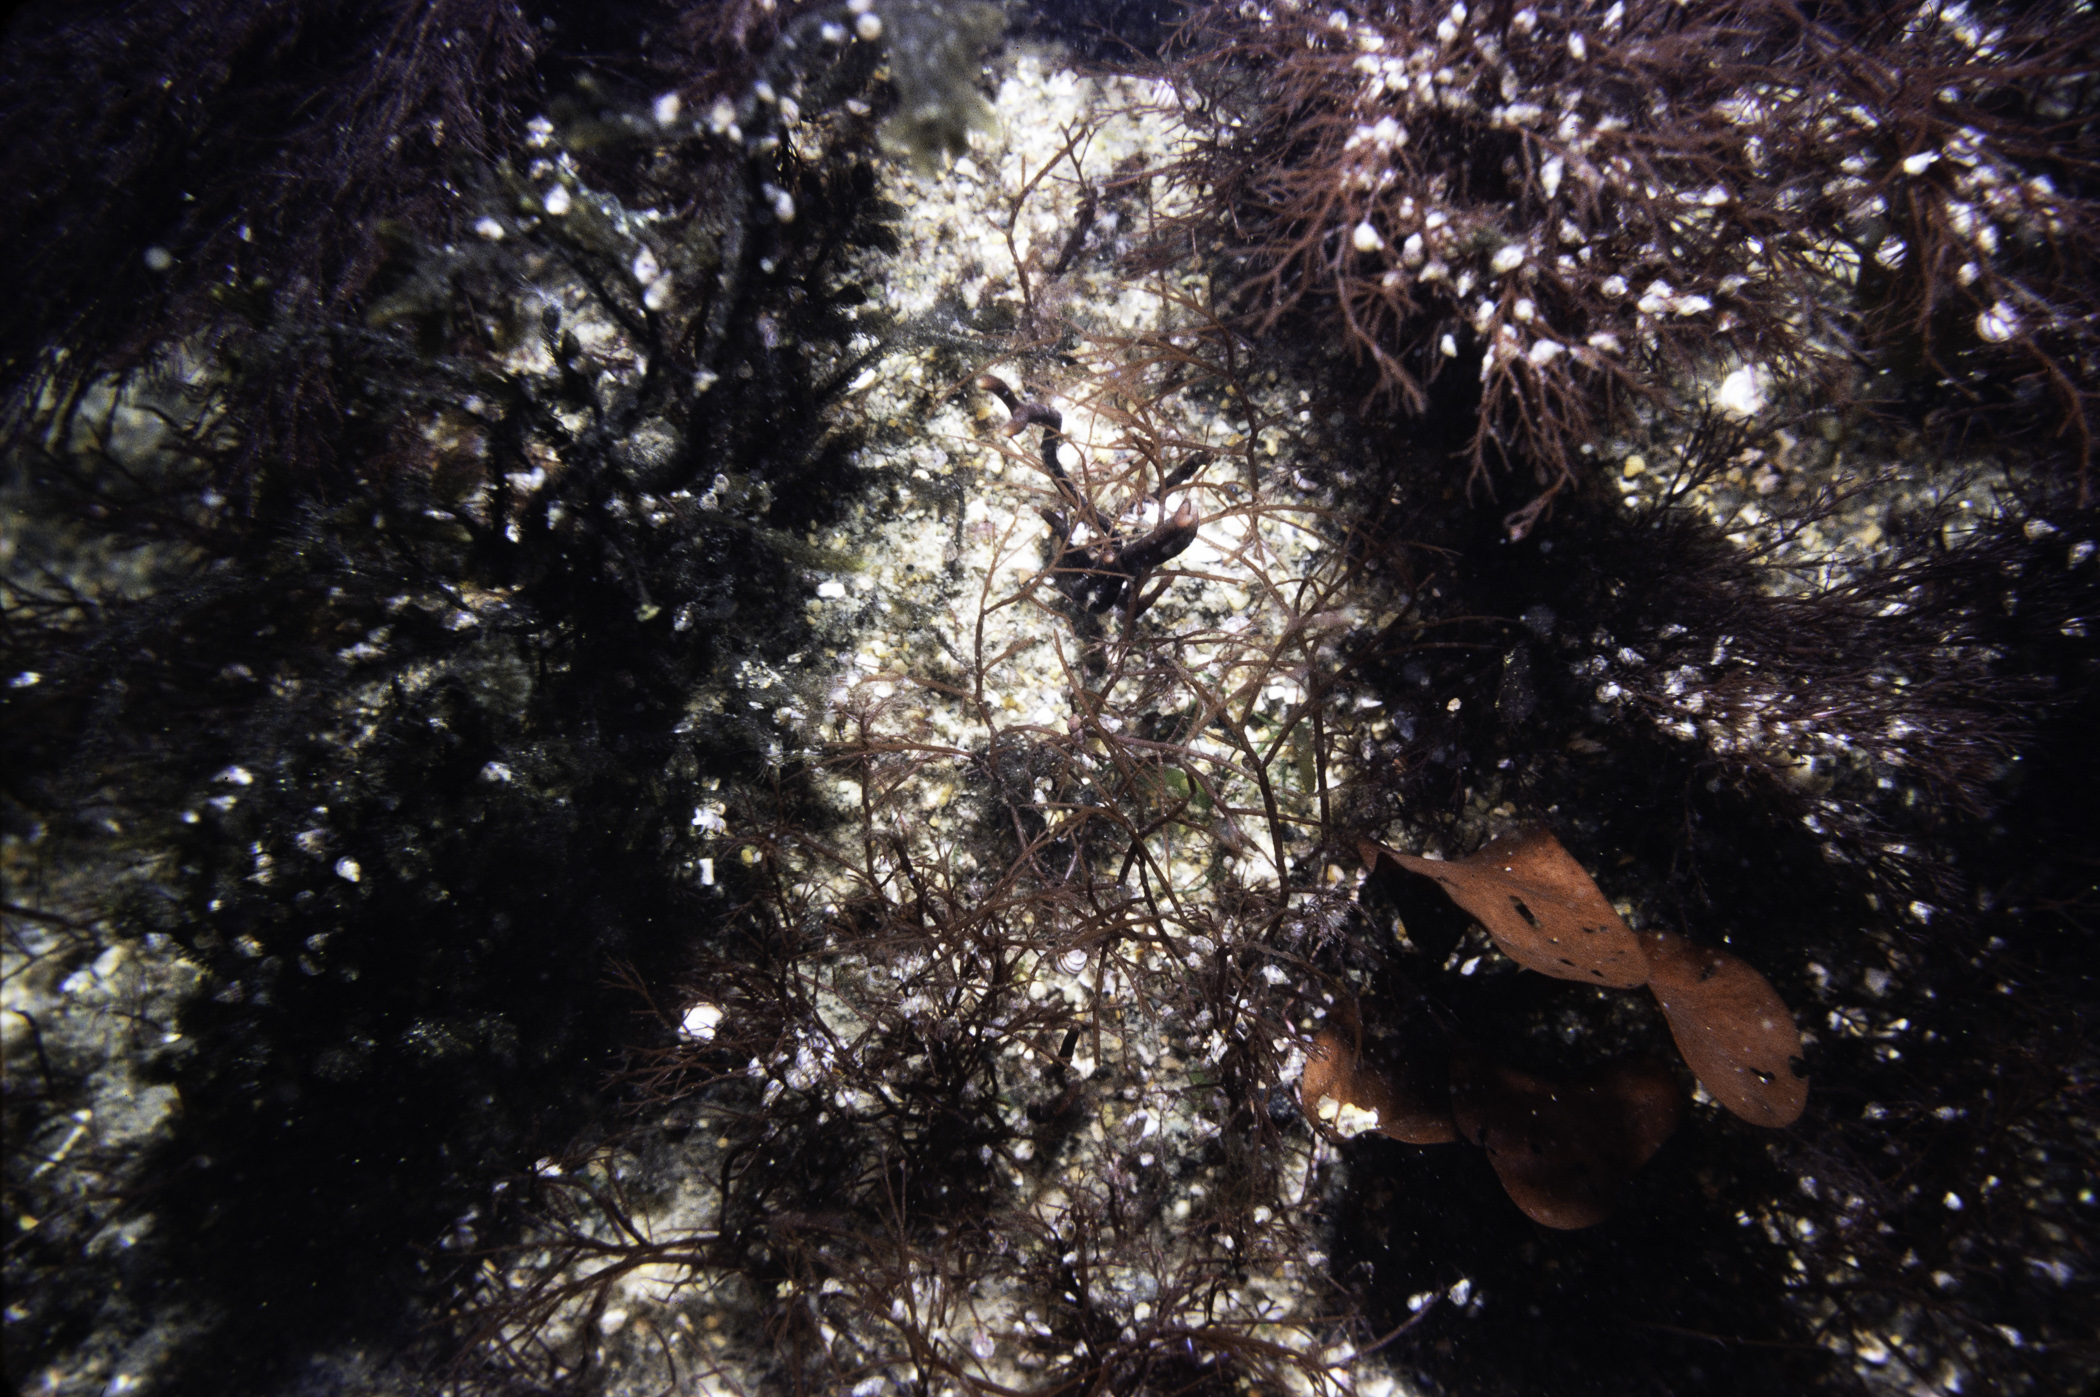 Dilsea carnosa, Cladostephus spongiosus. Site: Murphy's Point, Annalong. 